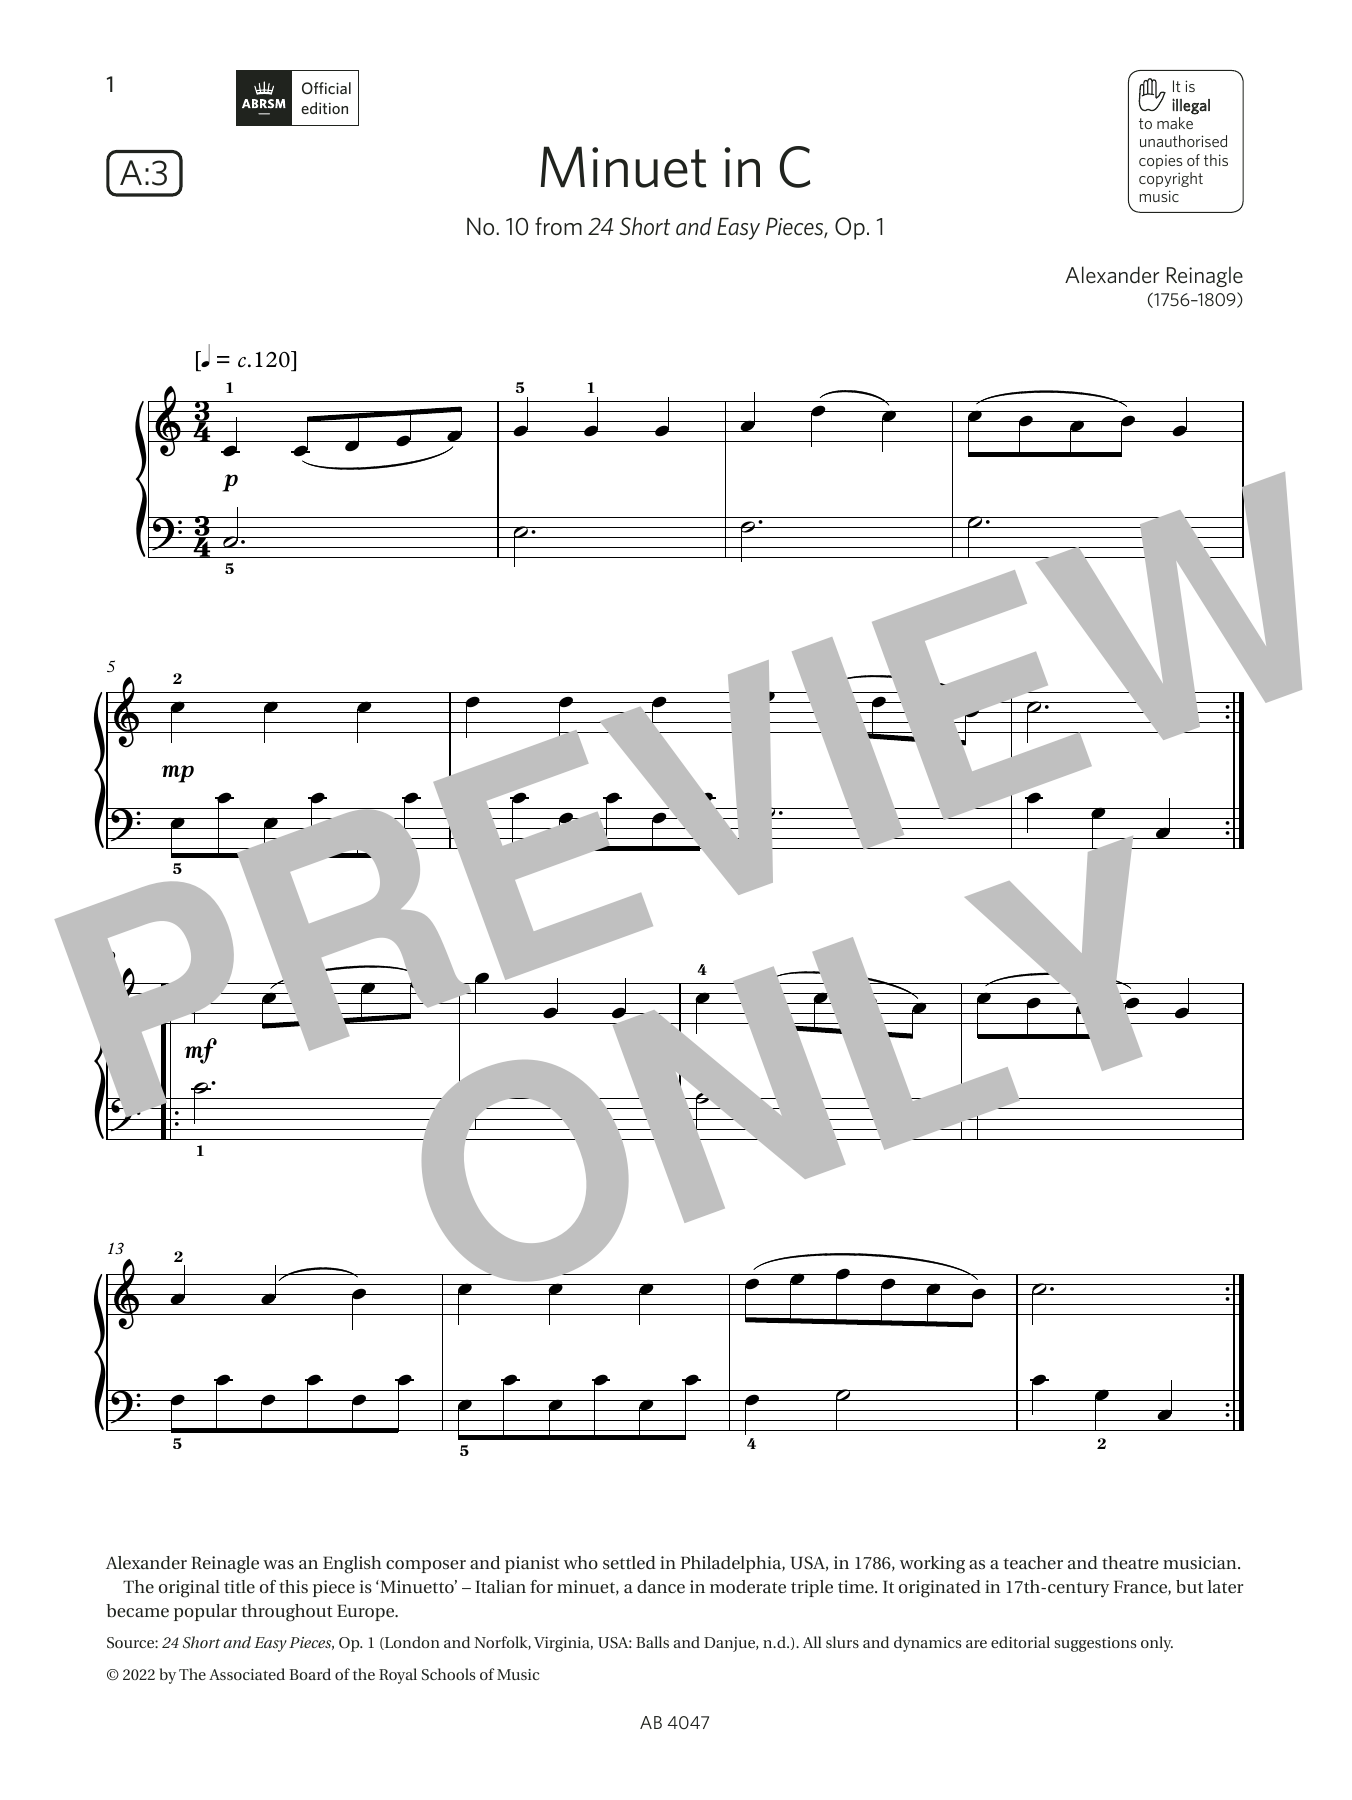 Download Alexander Reinagle Minuet in C (Grade 1, list A3, from the Sheet Music